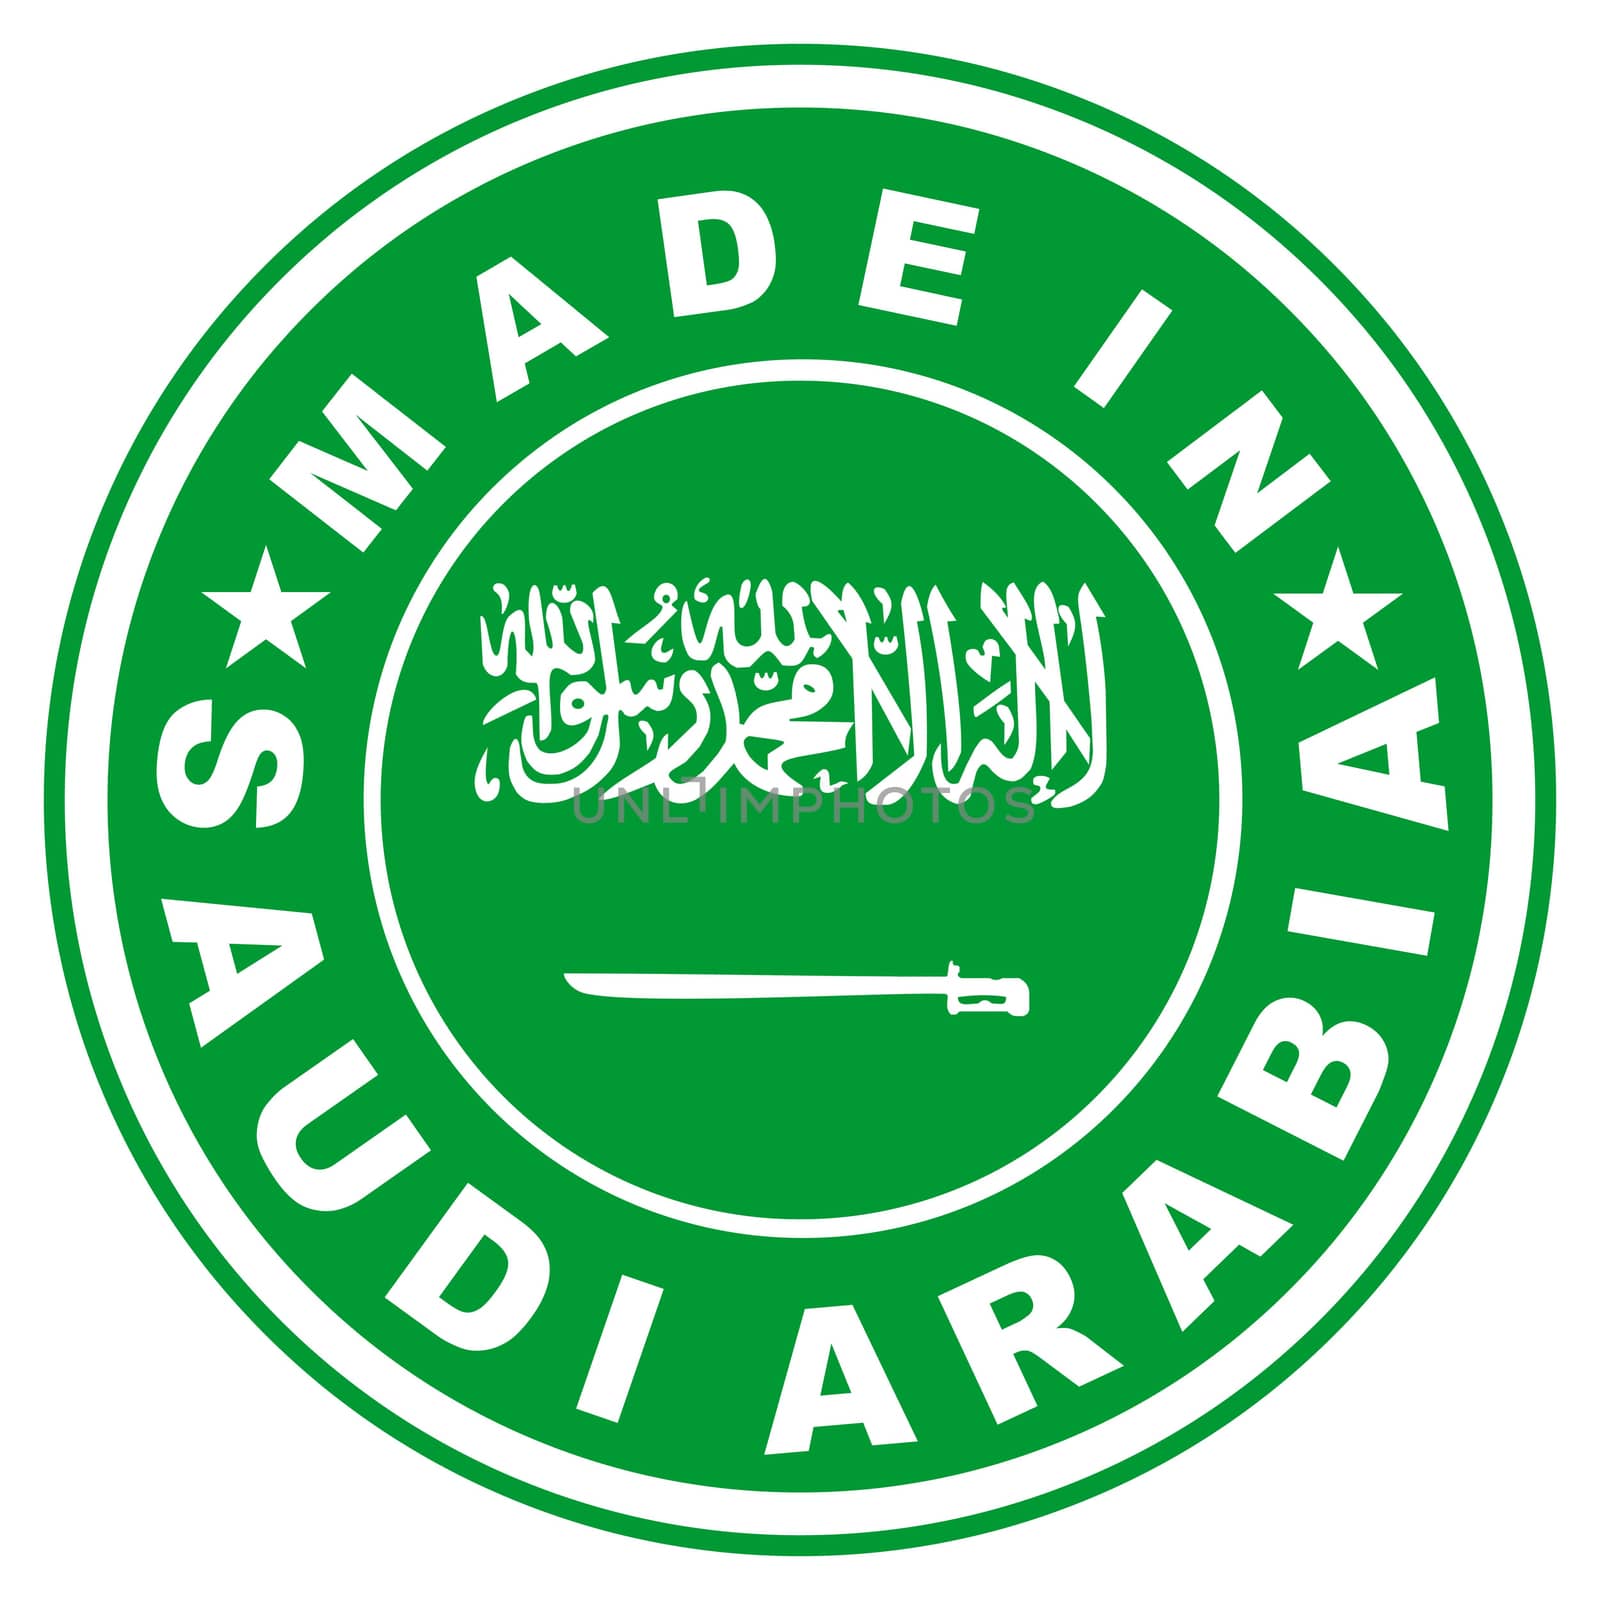 made in saudi arabia by tony4urban